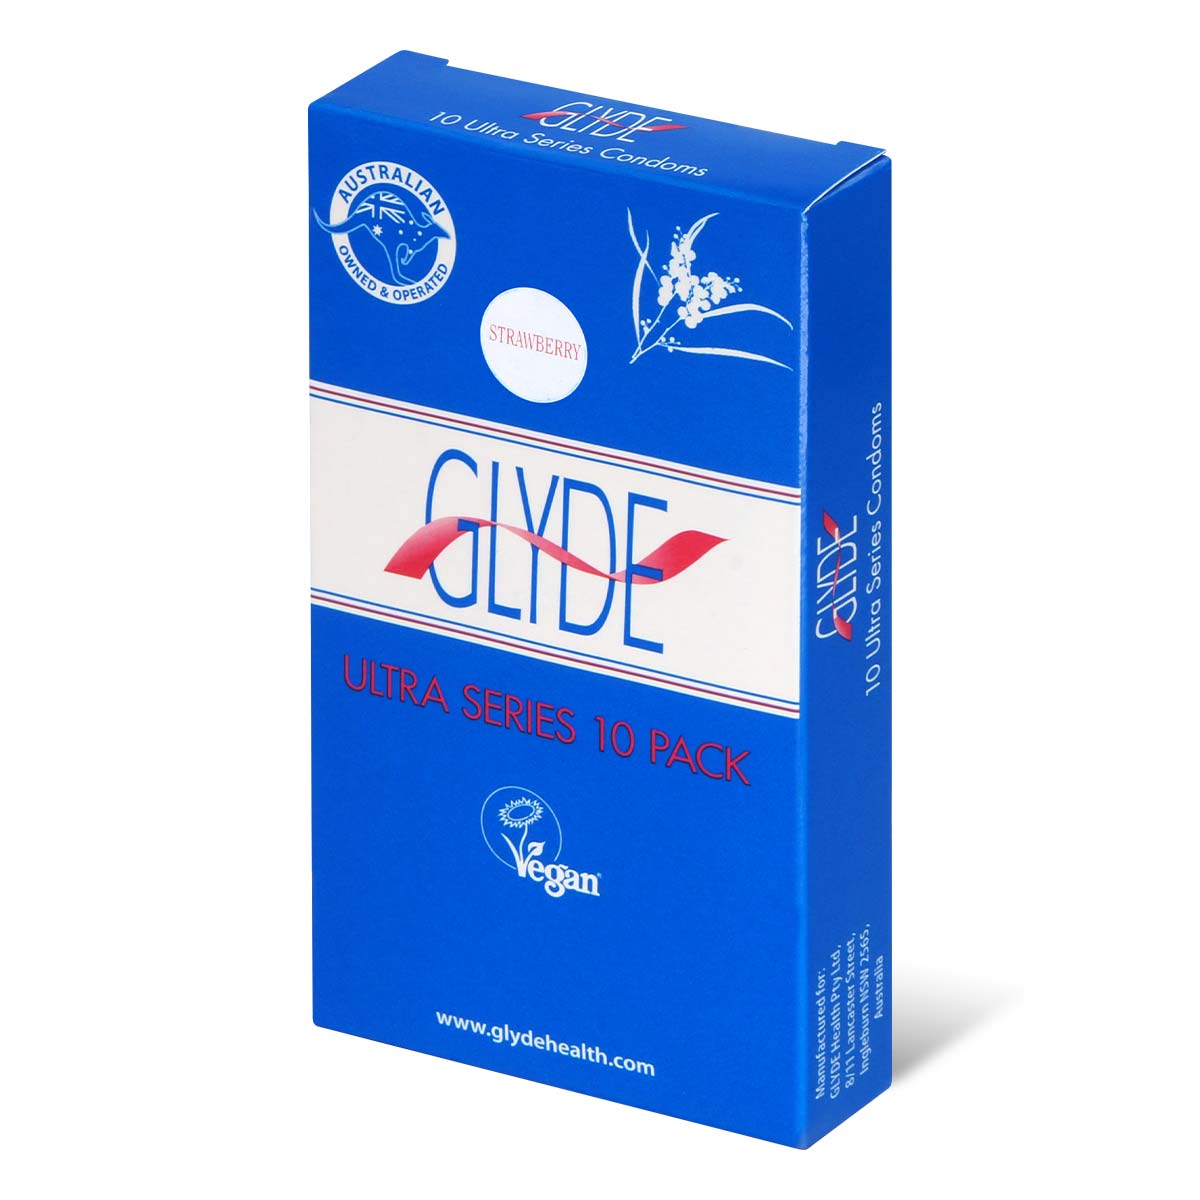 Glyde Vegan Condom Strawberry 10's Pack Latex Condom-p_1